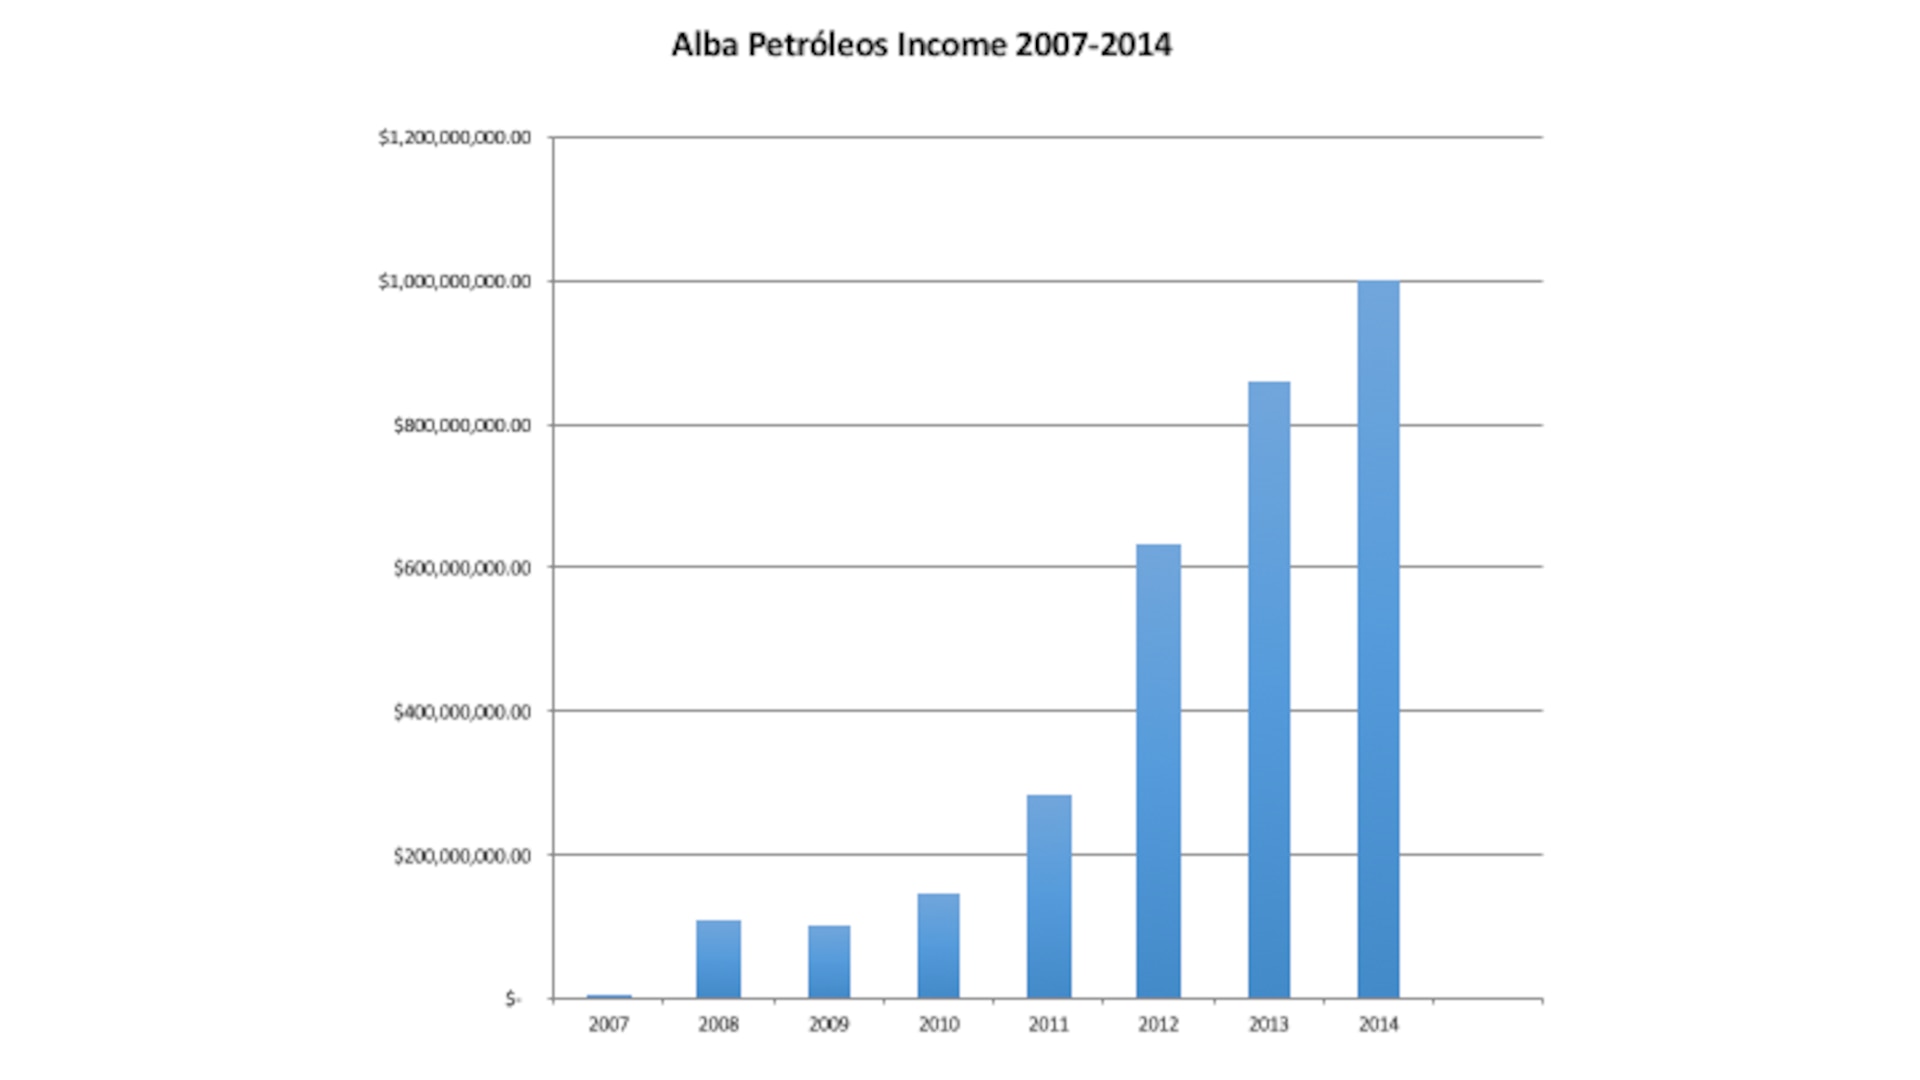 Figure 8.1 Alba Petróleos Income 2007-2014